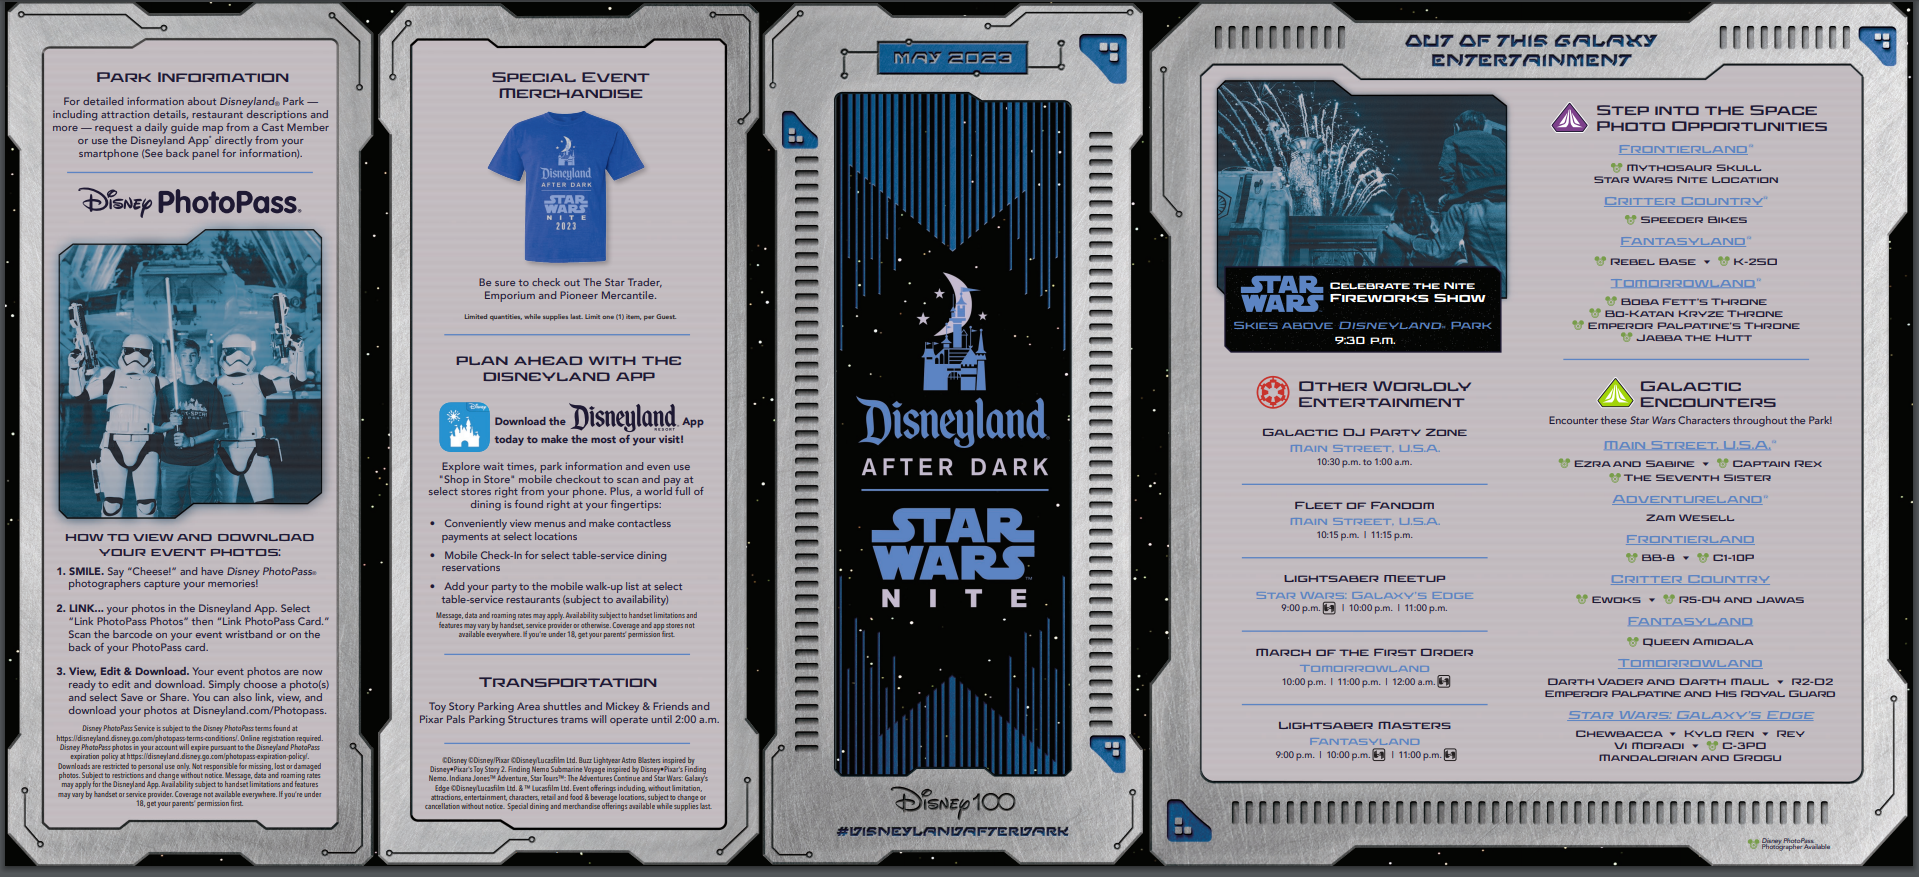 Your Complete Guide to Disneyland After Dark Star Wars Nite 